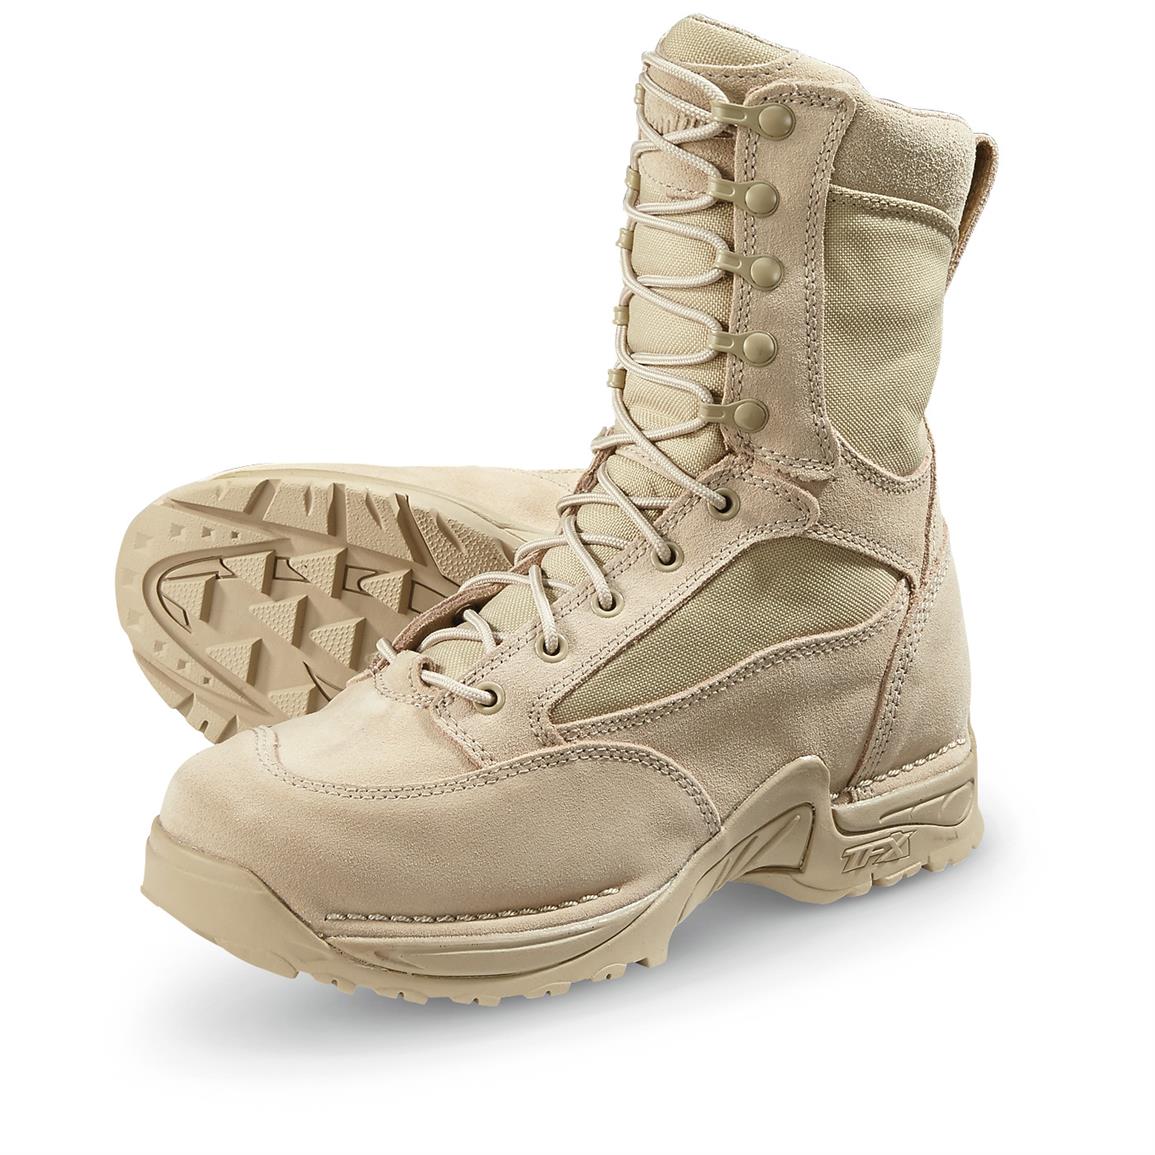 Danner Desert TFX Rough-out GORE-TEX Boots - 643164, Tactical 